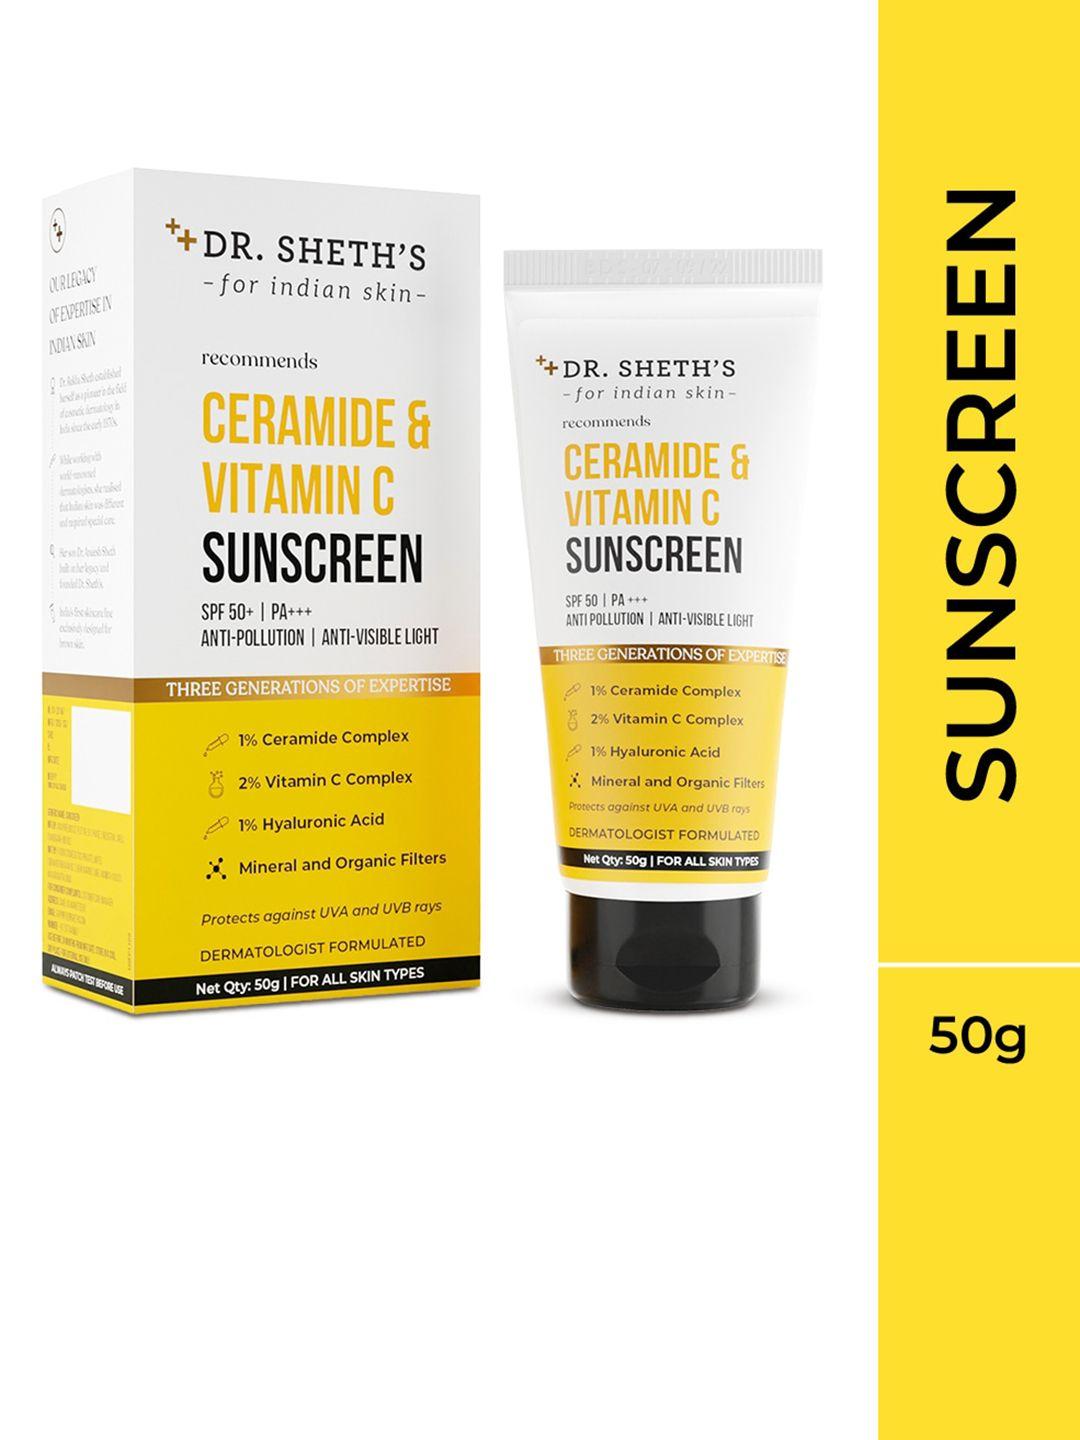 DR. SHETHS Ceramide & Vitamin C SPF 50+ Sunscreen - 50g